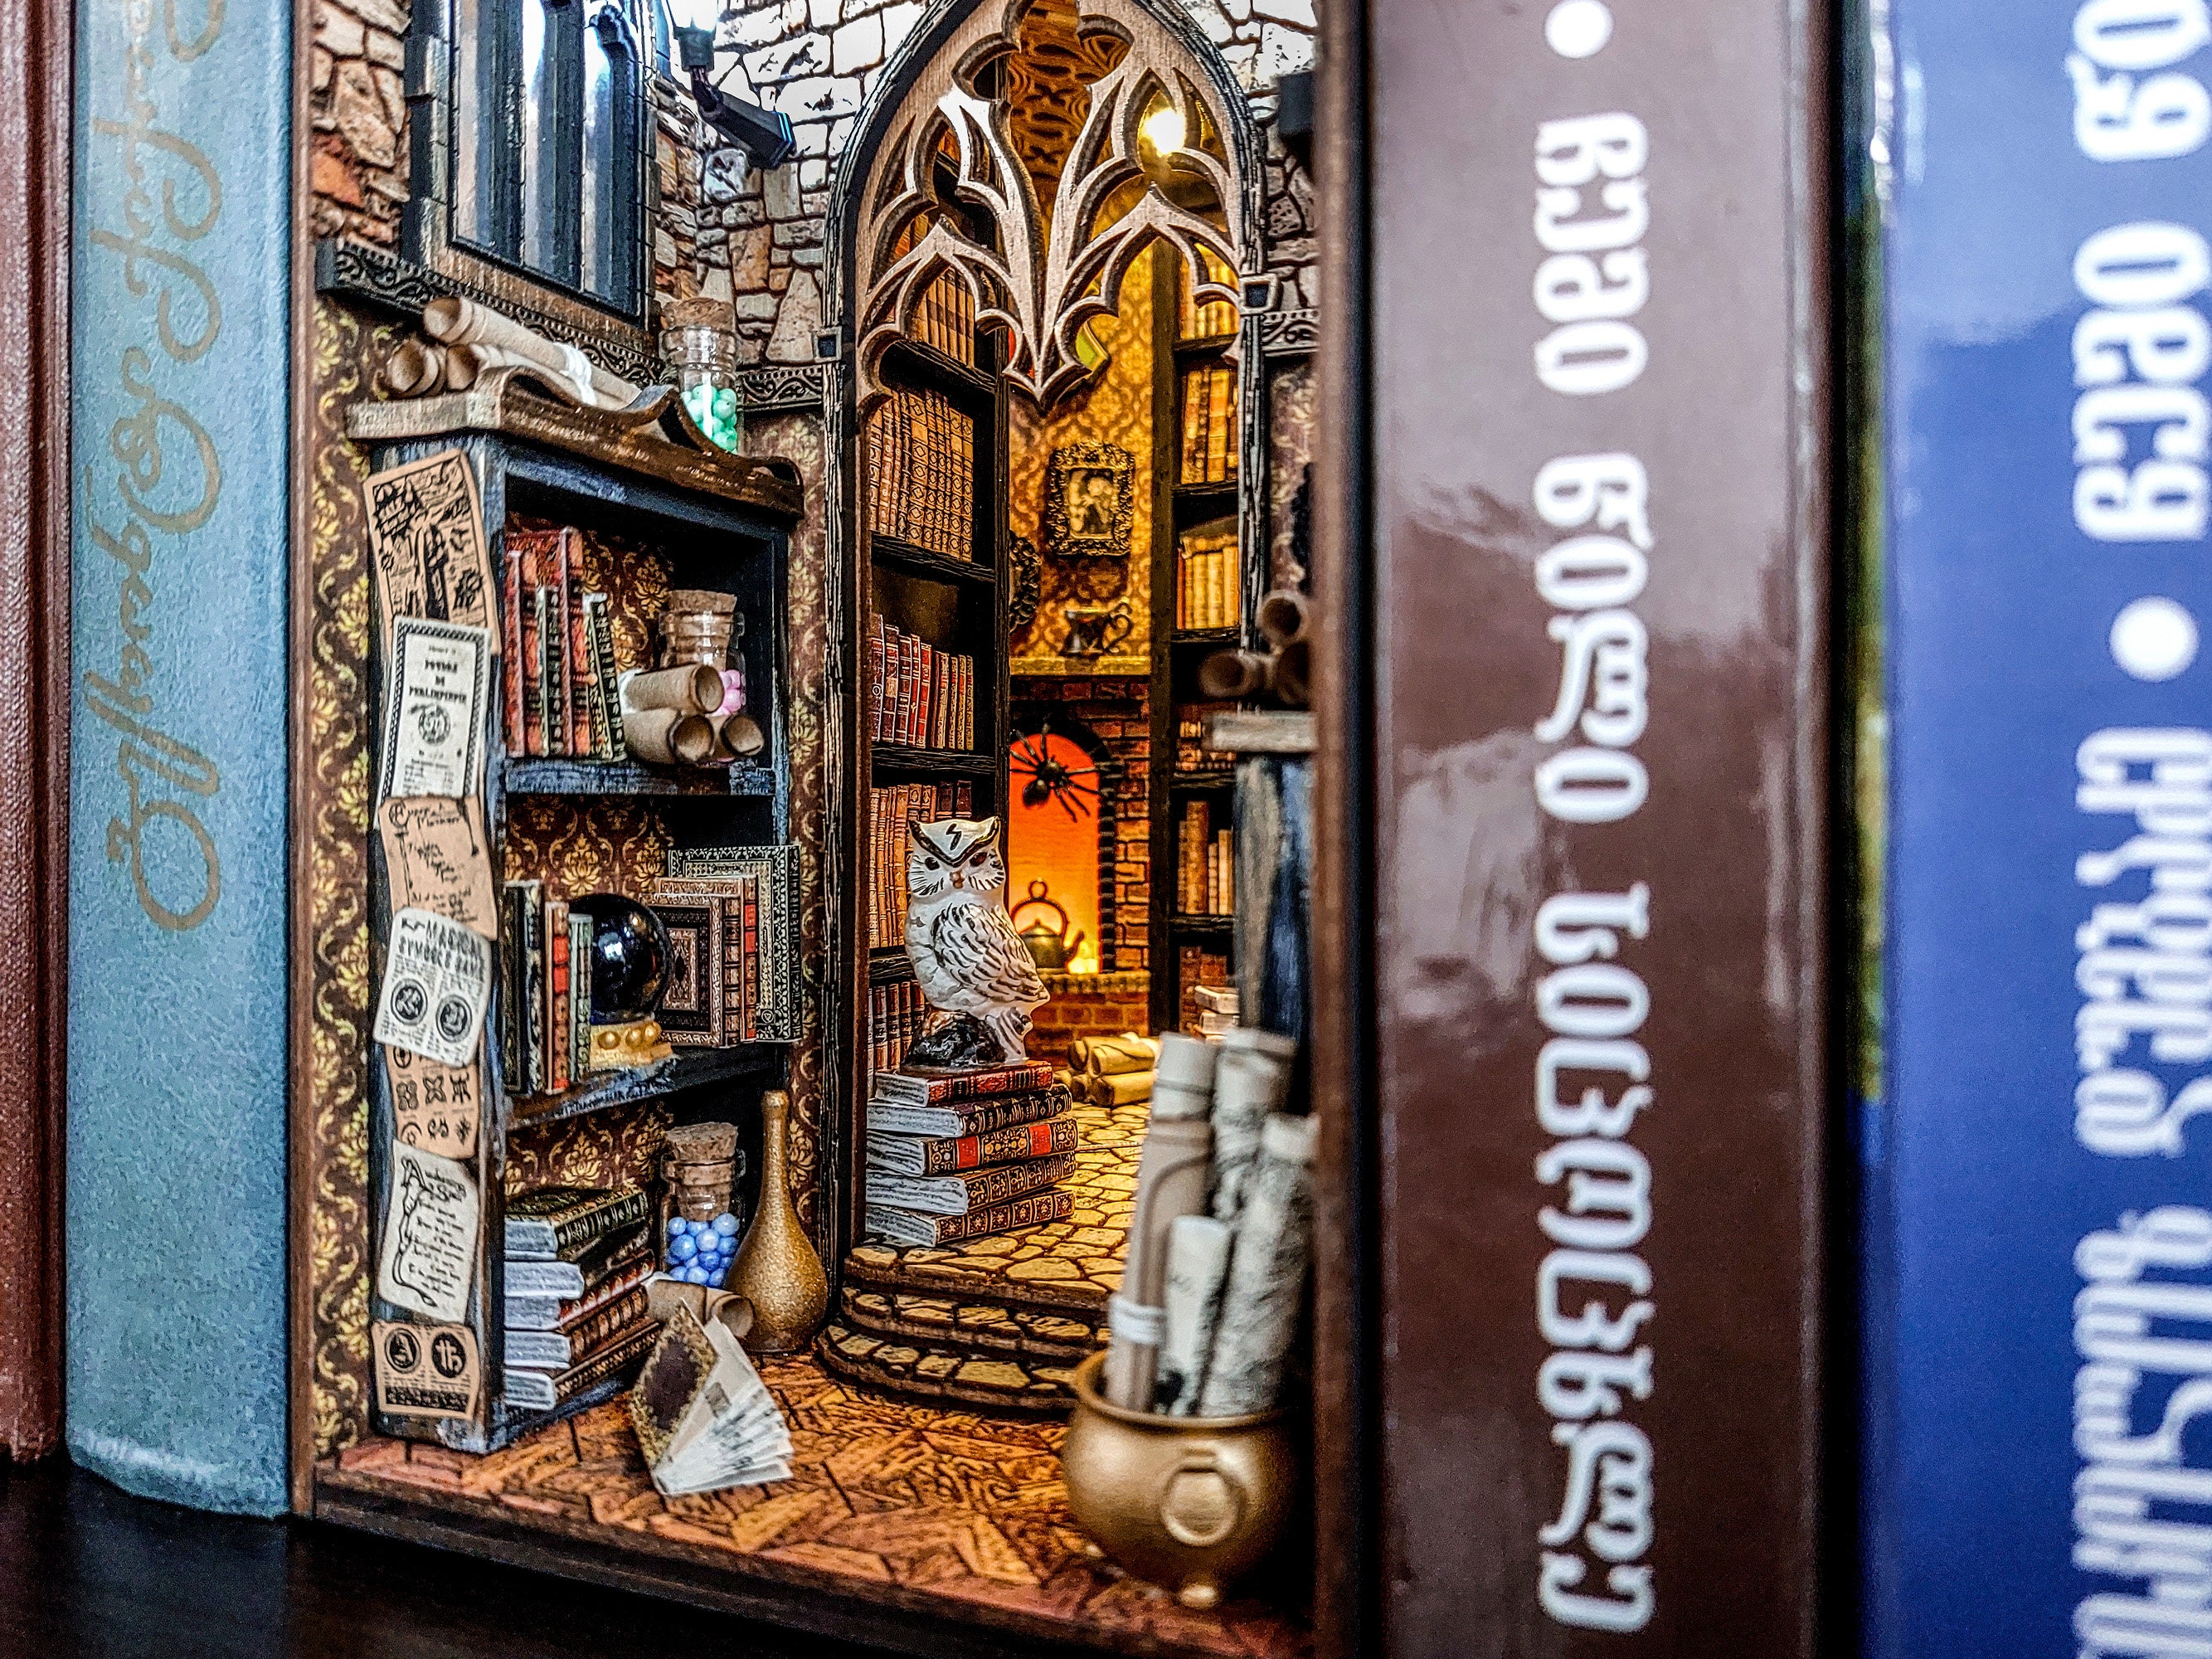 Book Nook Library Diorama Bookshelf Insert Dark Academia Booknook, Wizard  Library, Bookshelf Insert, Magic Light, Secret Library 